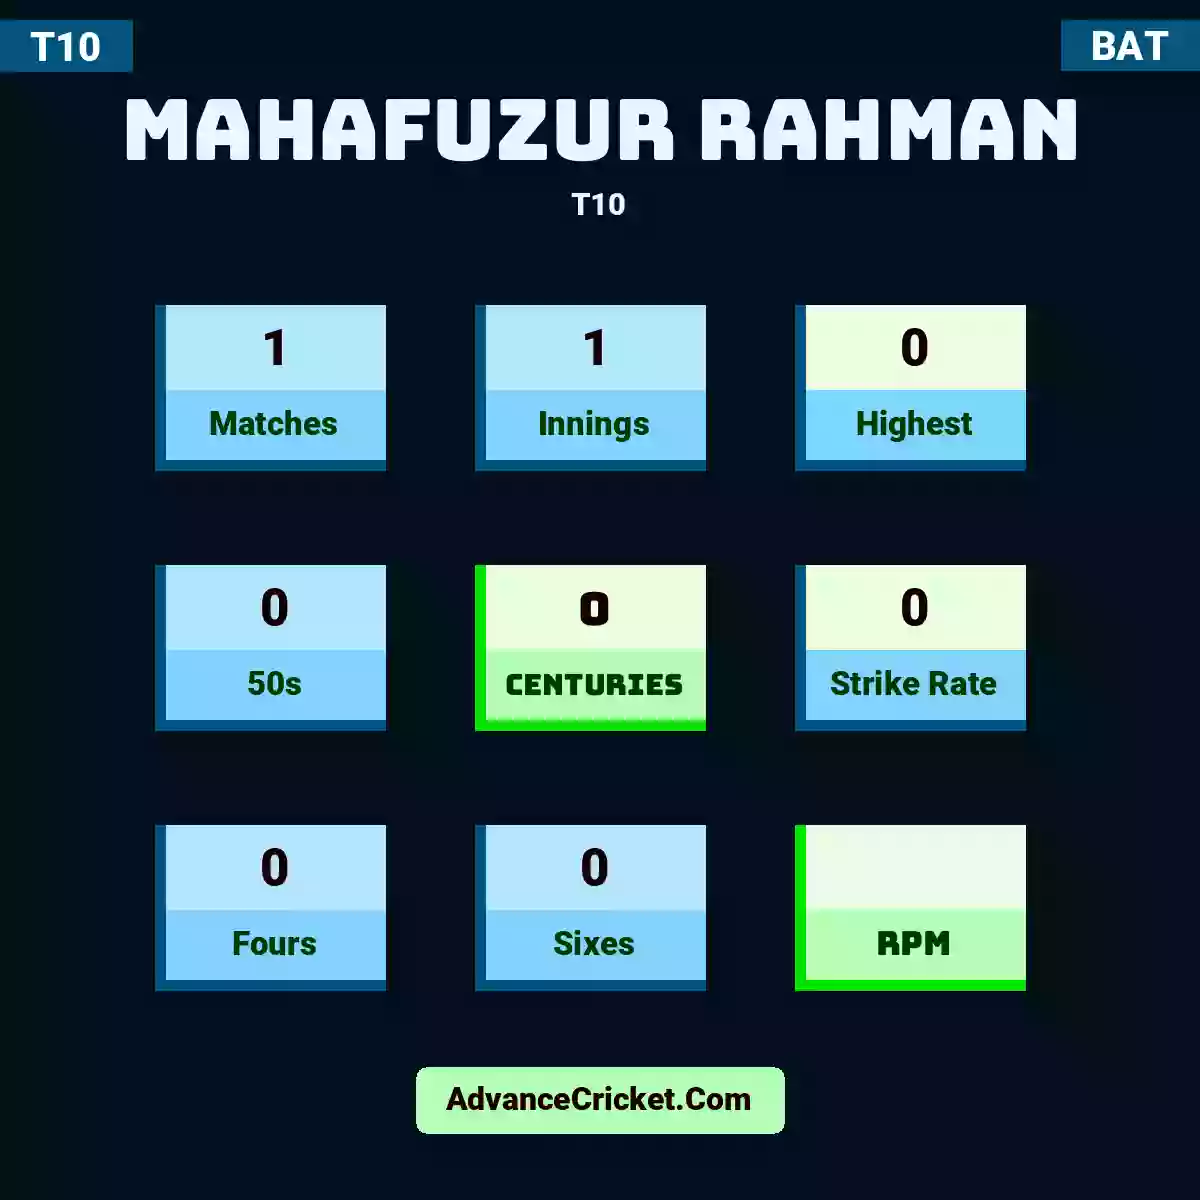 Mahafuzur Rahman T10 , Mahafuzur Rahman played 1 matches, scored 0 runs as highest, 0 half-centuries, and 0 centuries, with a strike rate of 0. M.Rahman hit 0 fours and 0 sixes.